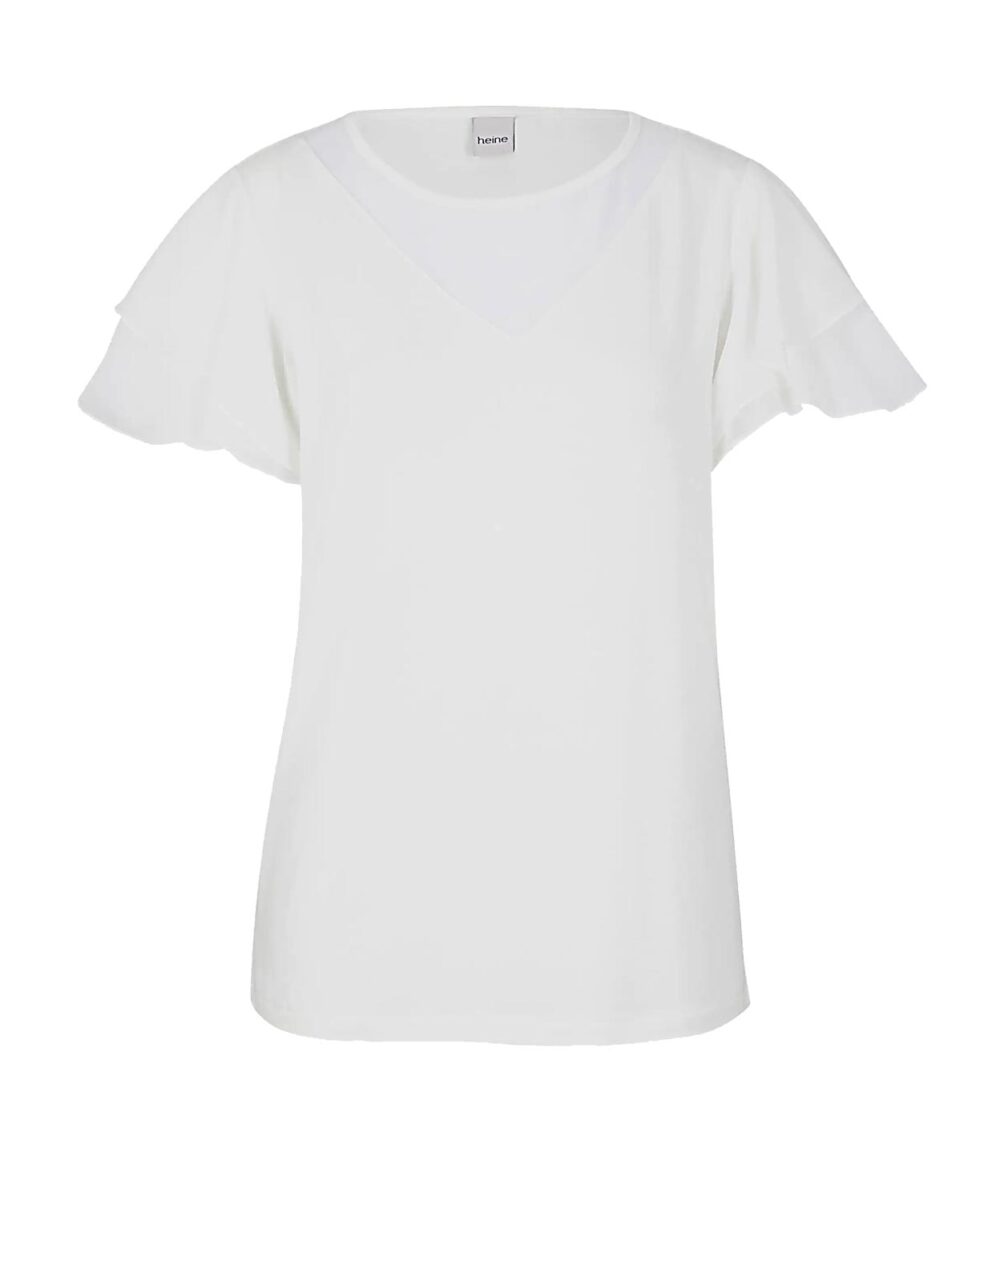 922.037 Damen Jersey Shirt Oberteil T-Shirt Frühling offwhite Chiffon Ashley Brooke